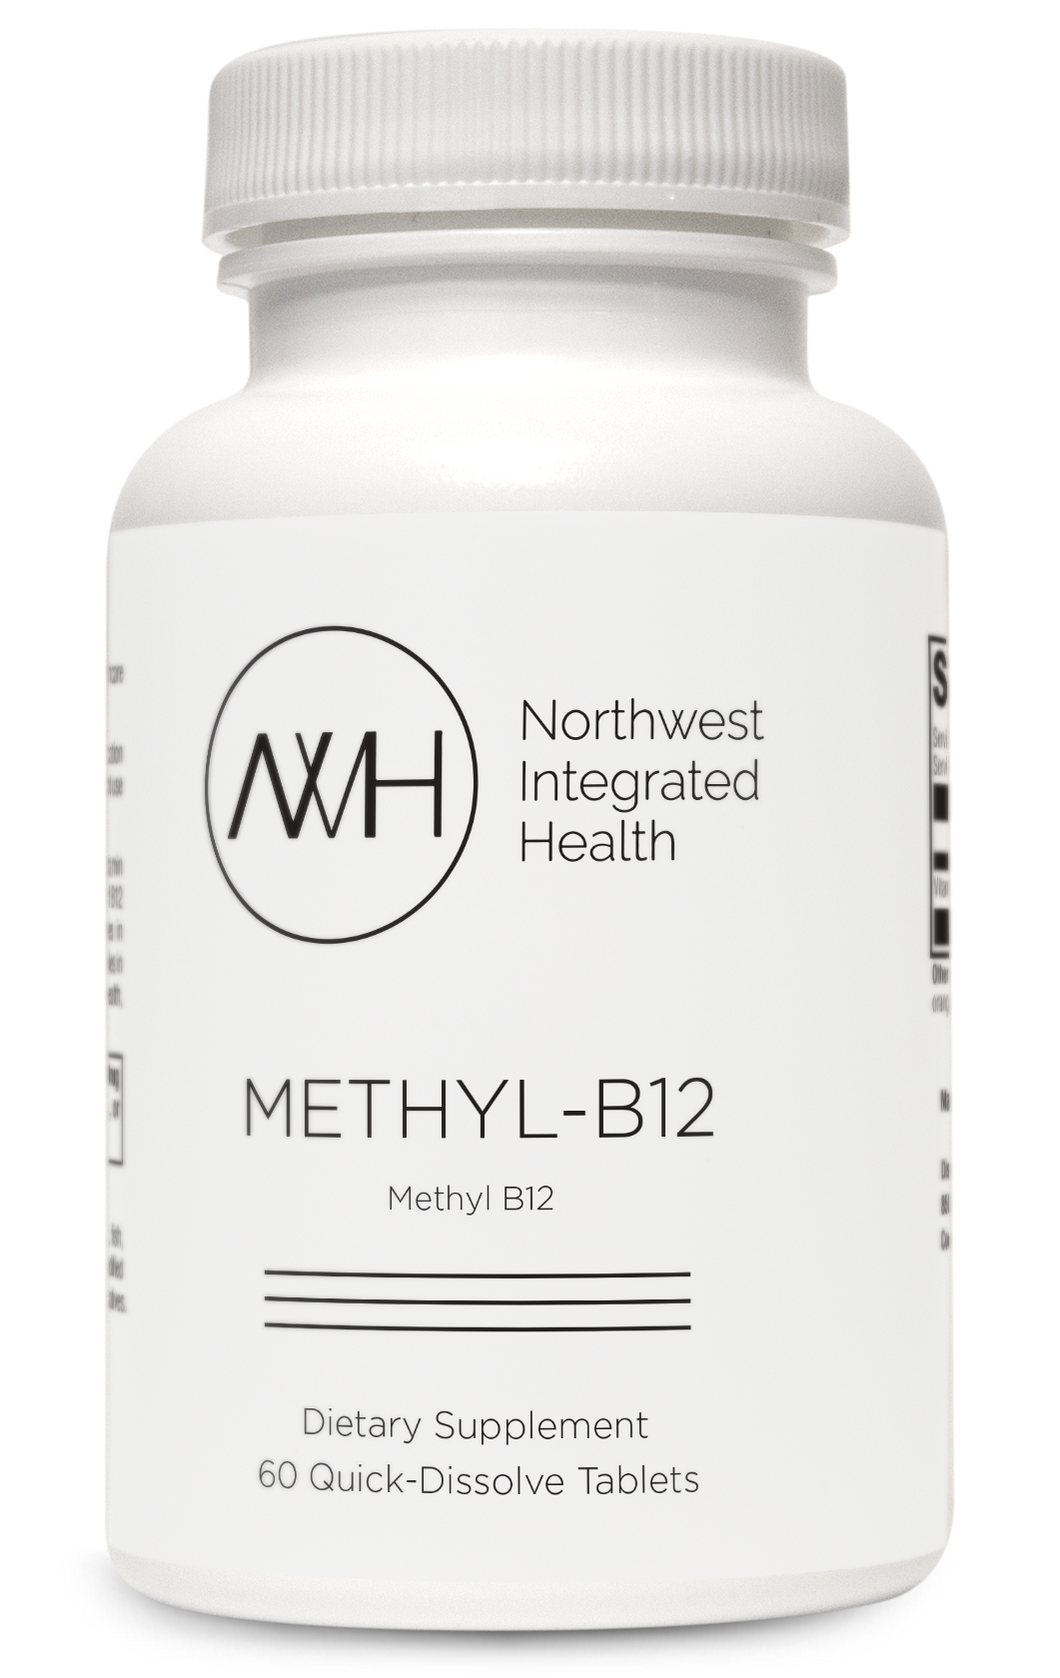 METHYL-B12